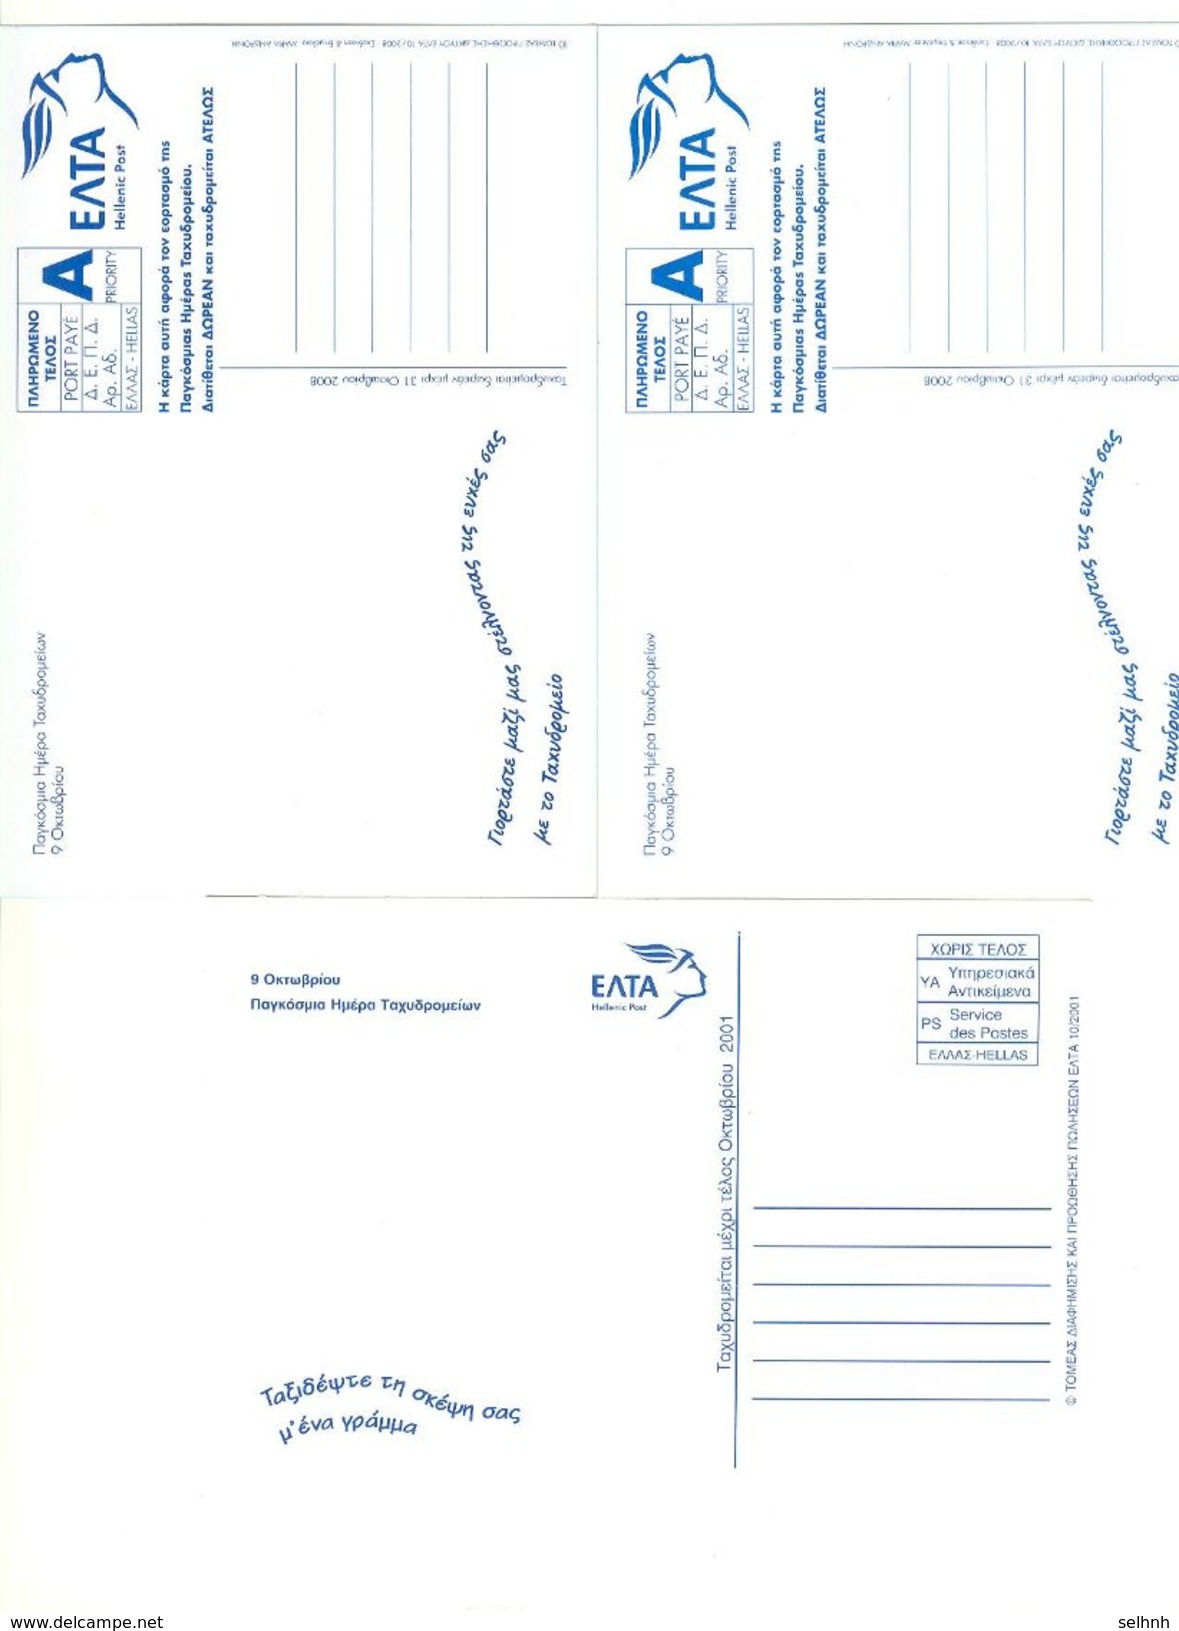 GREECE GRECE GREEK COMMEMORATIVE POSTMARK 70 YEARS OF PHILATELIC SOSIETY OF CORFU 9-10-2001 ON CARD FROM ELTA - Flammes & Oblitérations